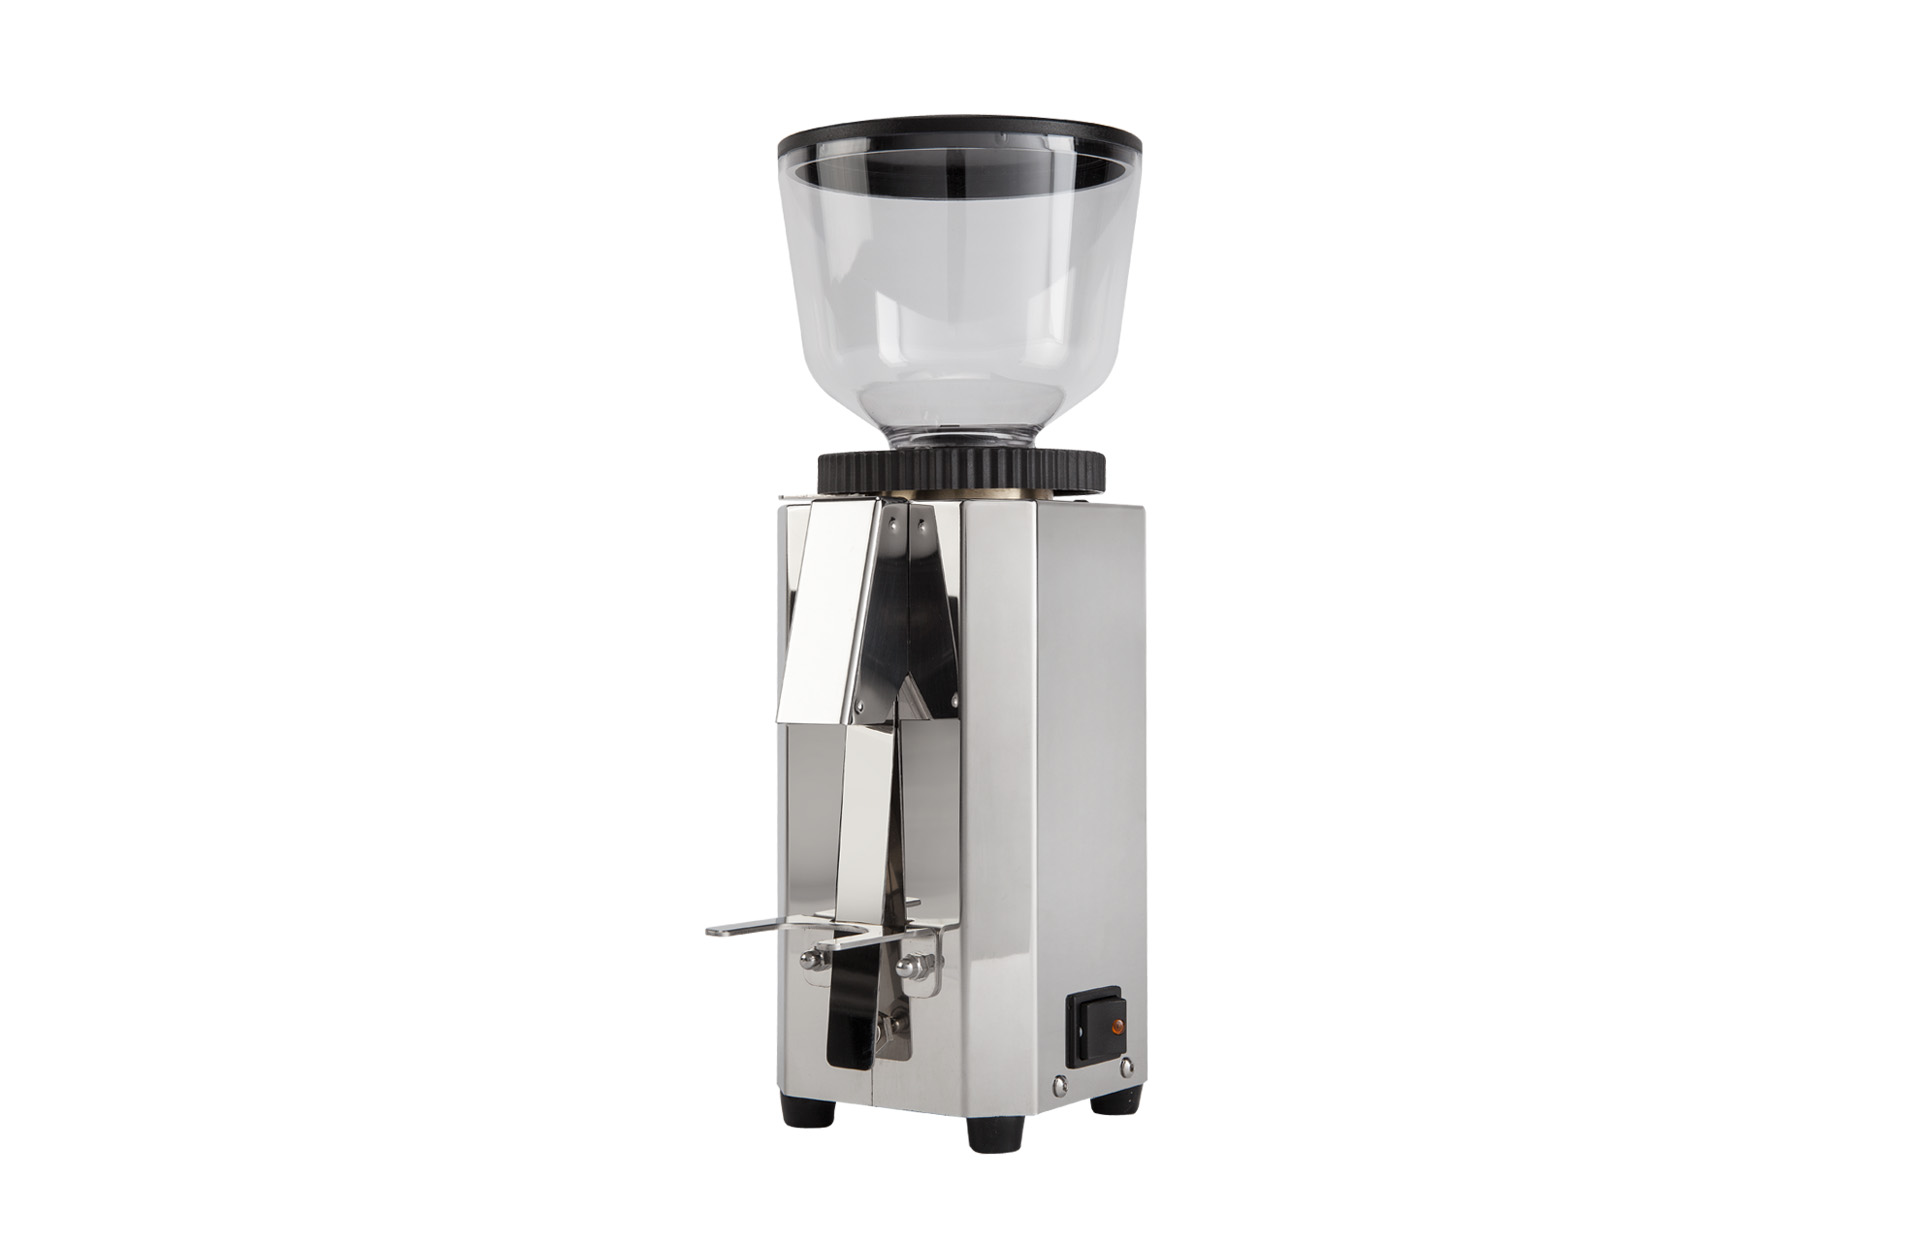 Pro M54 espresso grinder